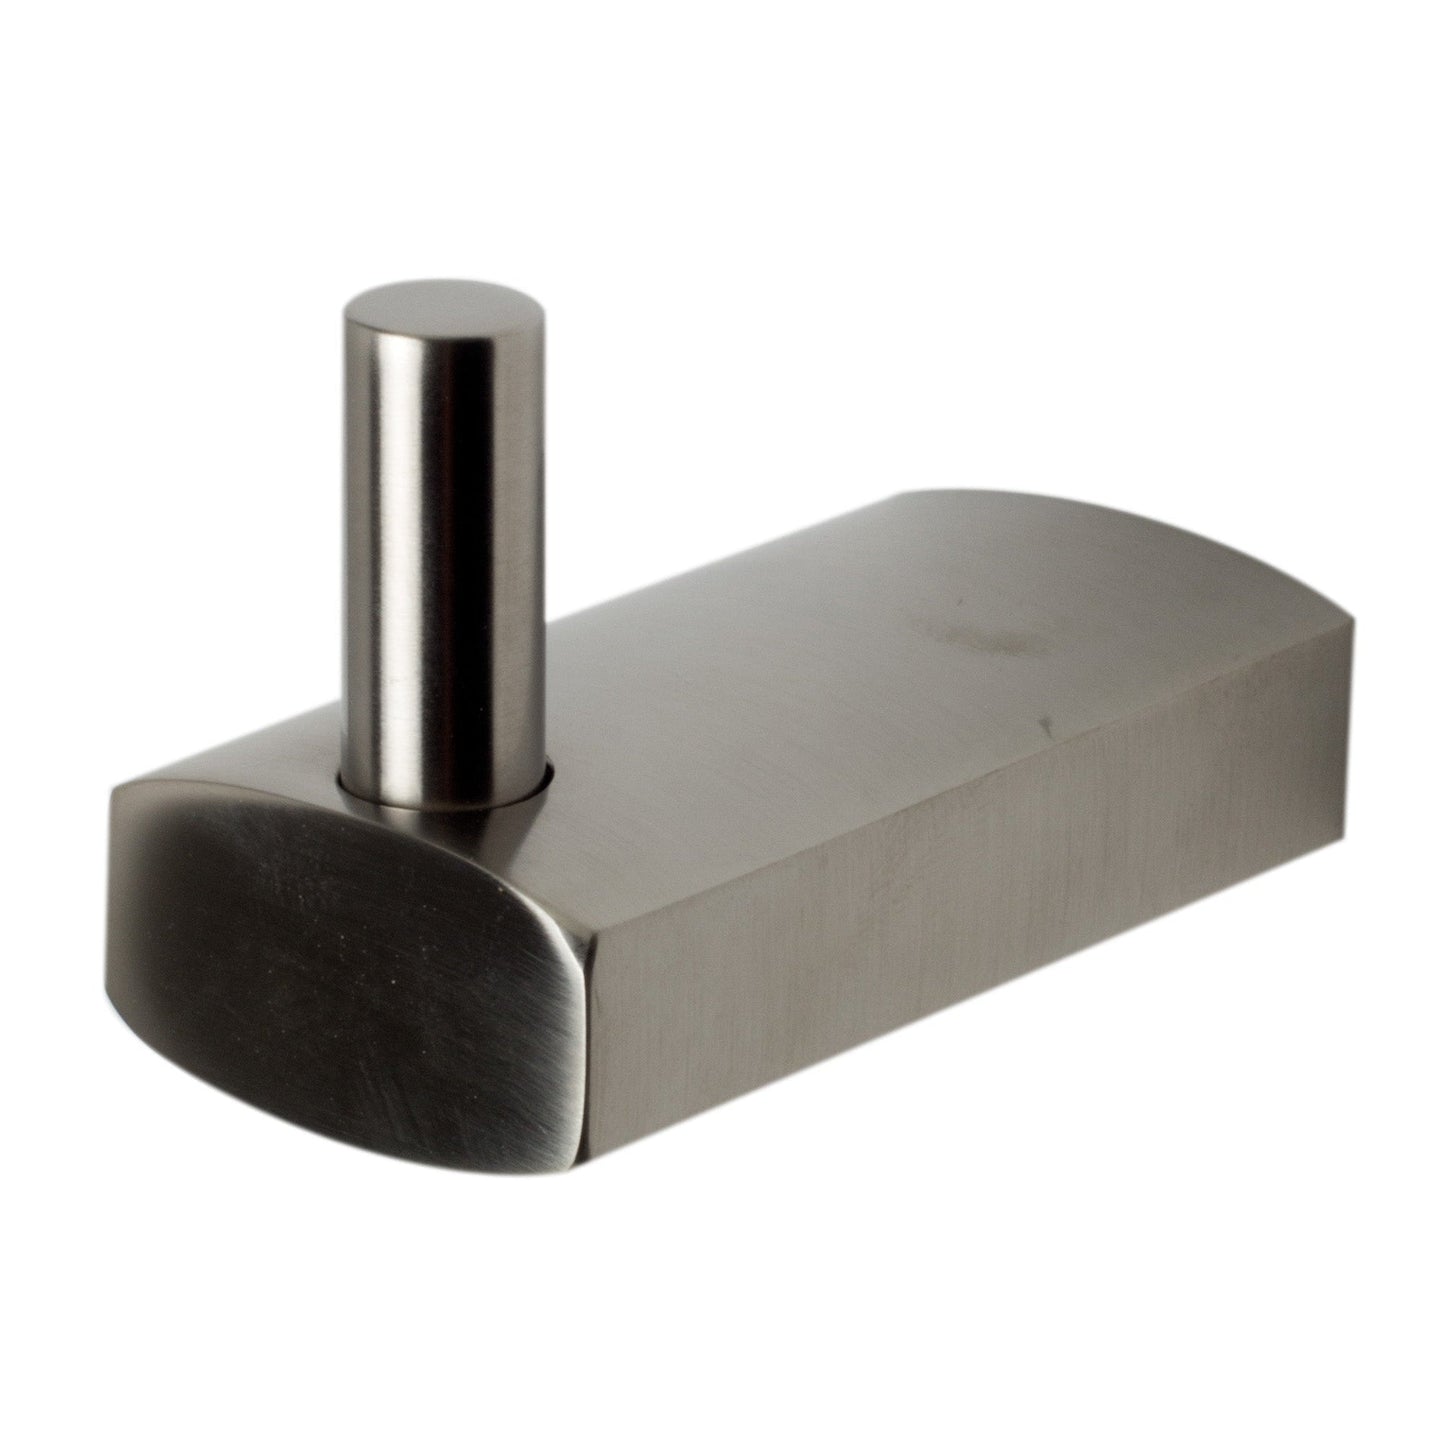 ALFI Brand AB9503-BN Brushed Nickel 6 Piece Matching Bathroom Accessory Set